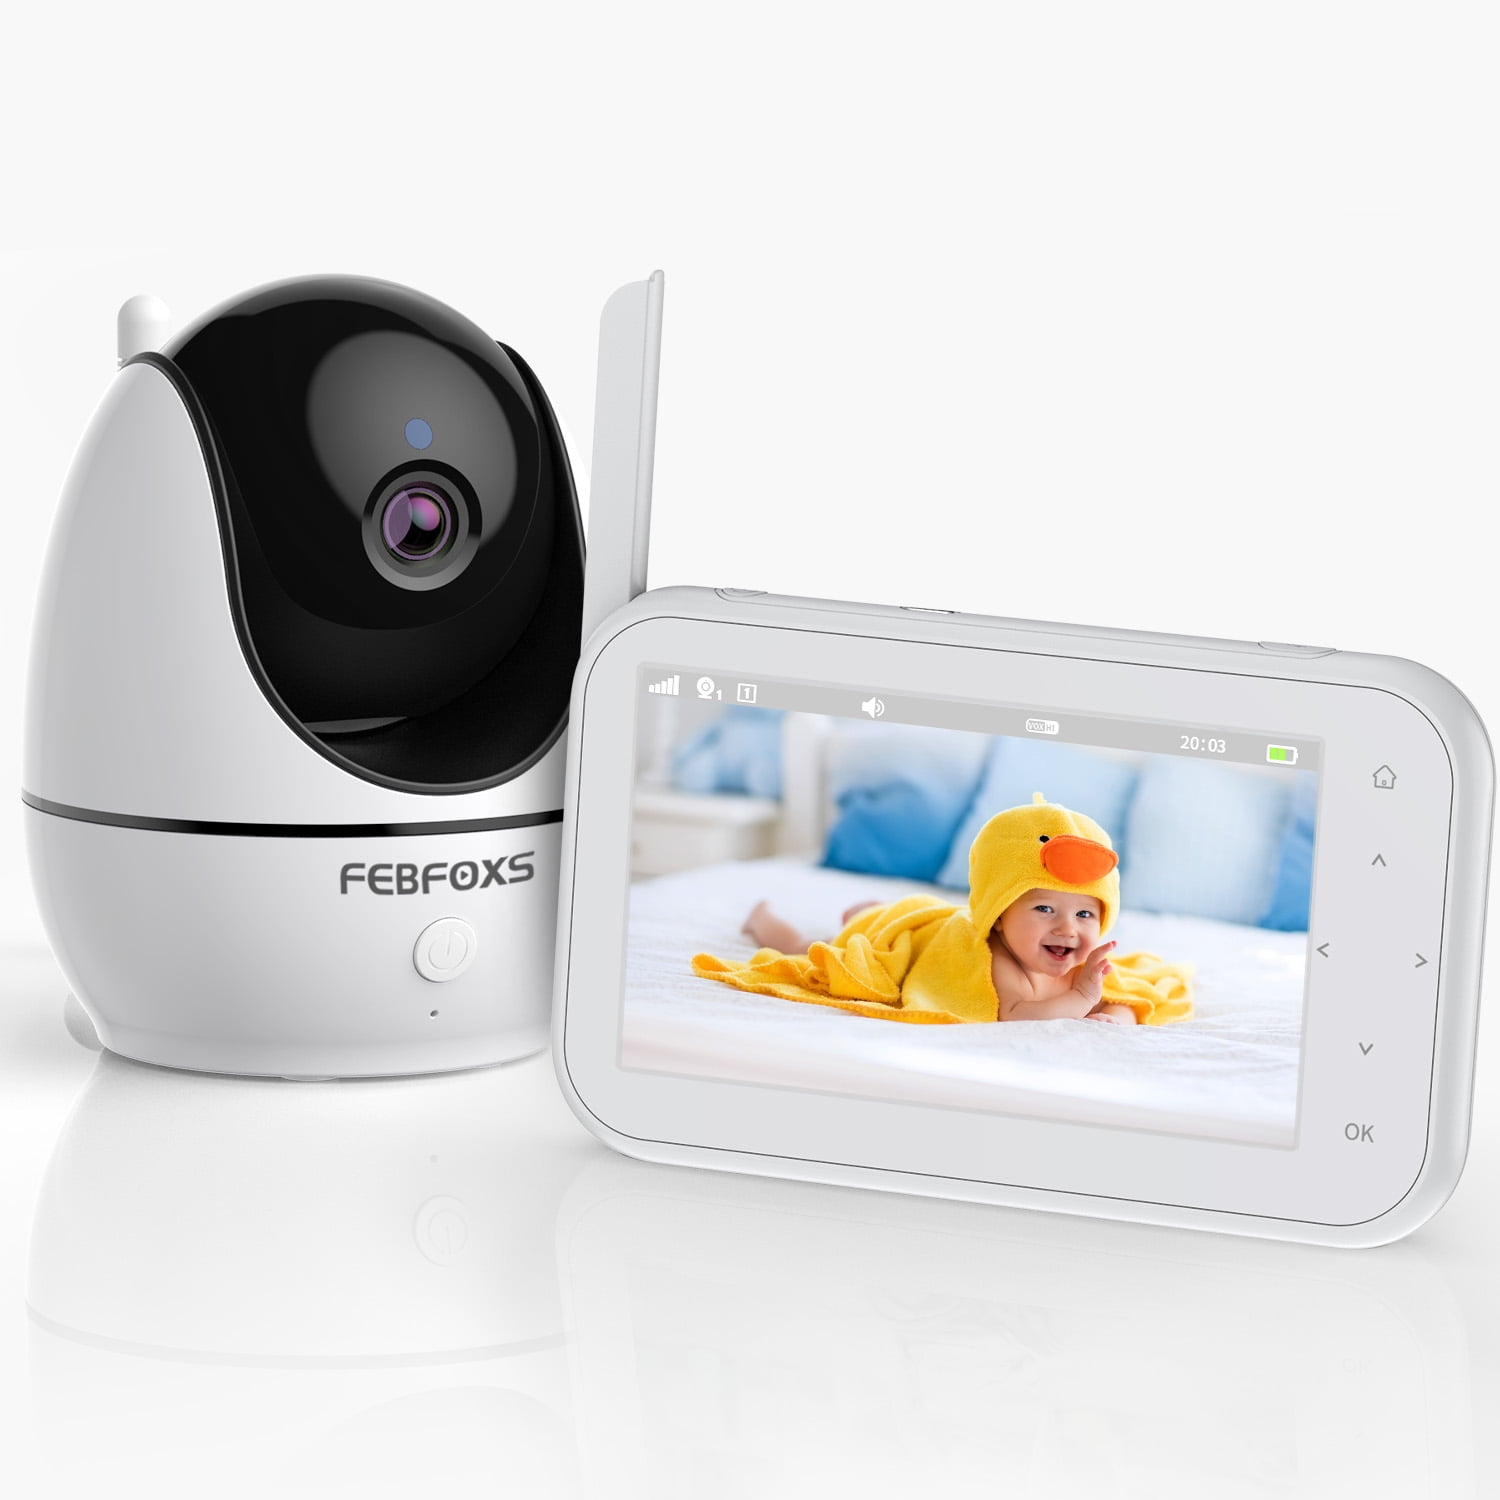 Febfoxs Baby Monitor 1080P with Camera & Audio, 4.3 LCD Screen